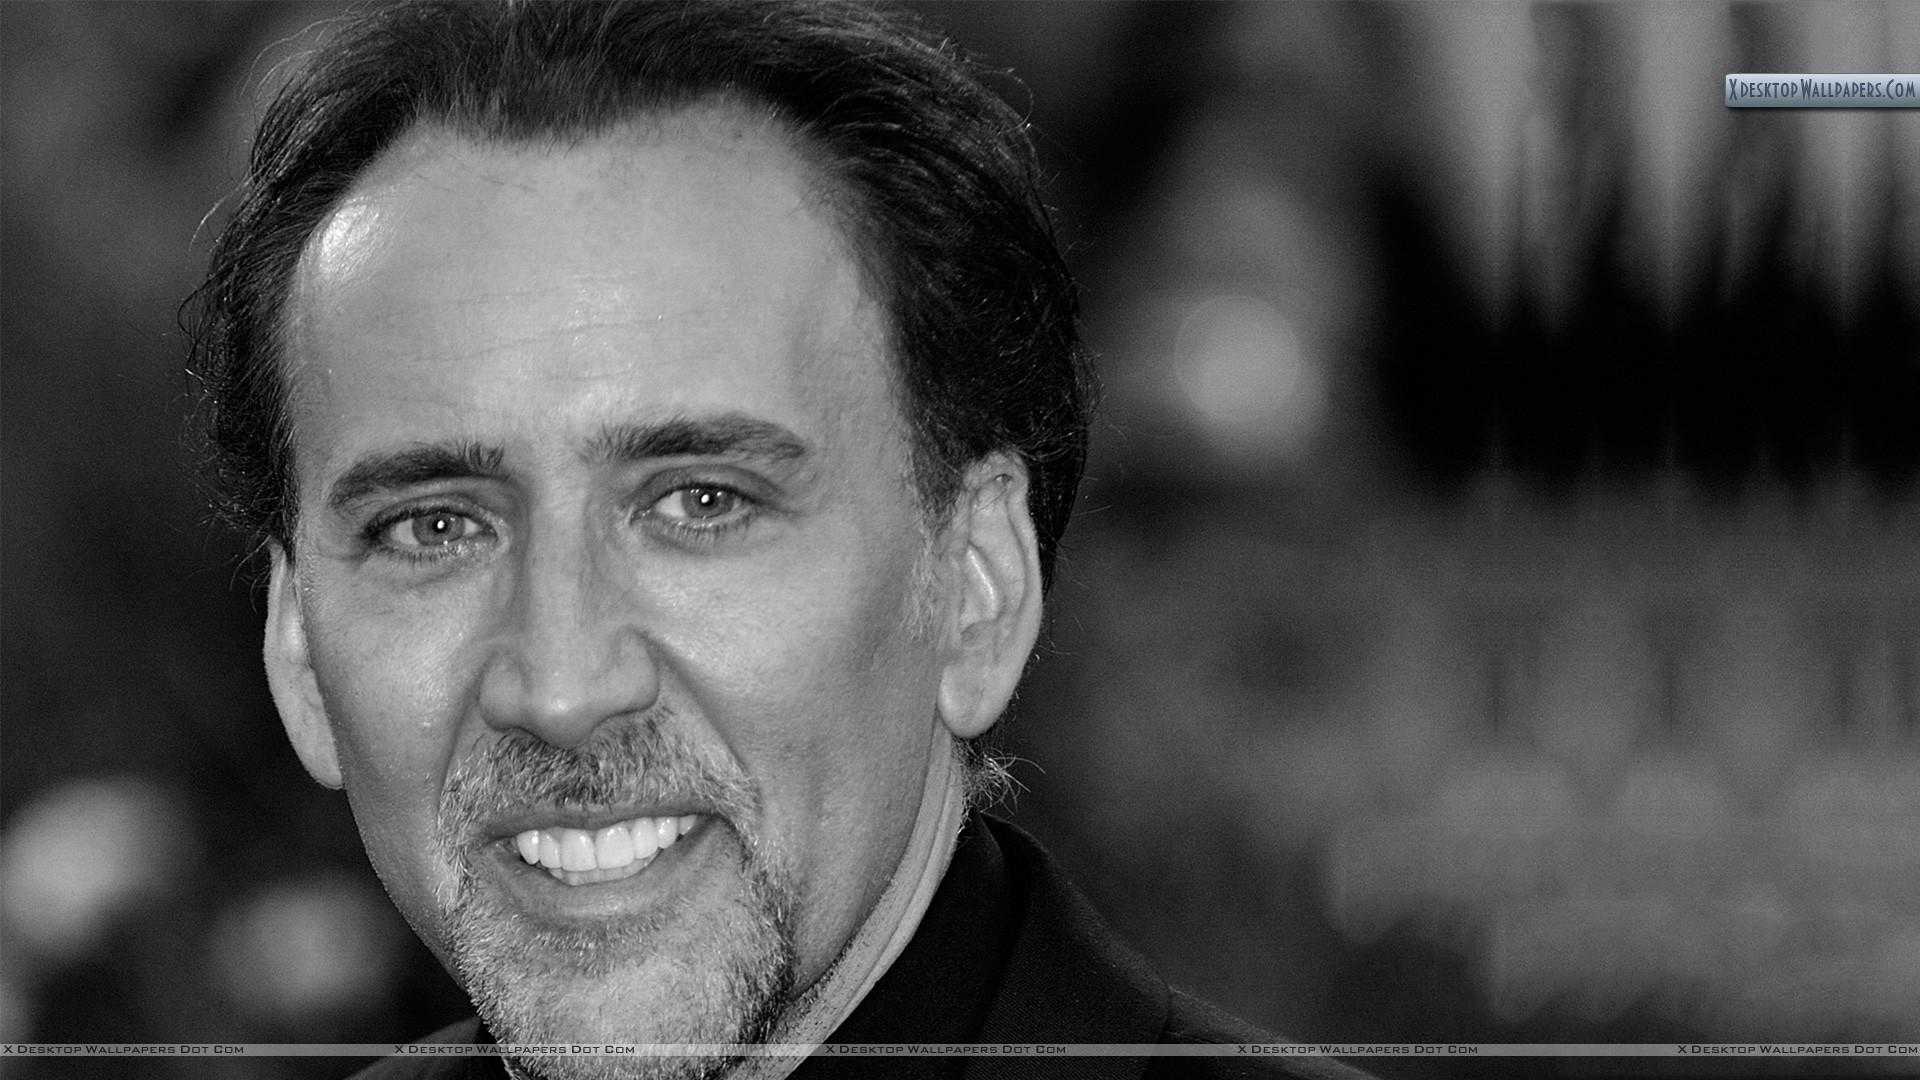 Nicolas Cage Wallpaper, Photo & Image in HD